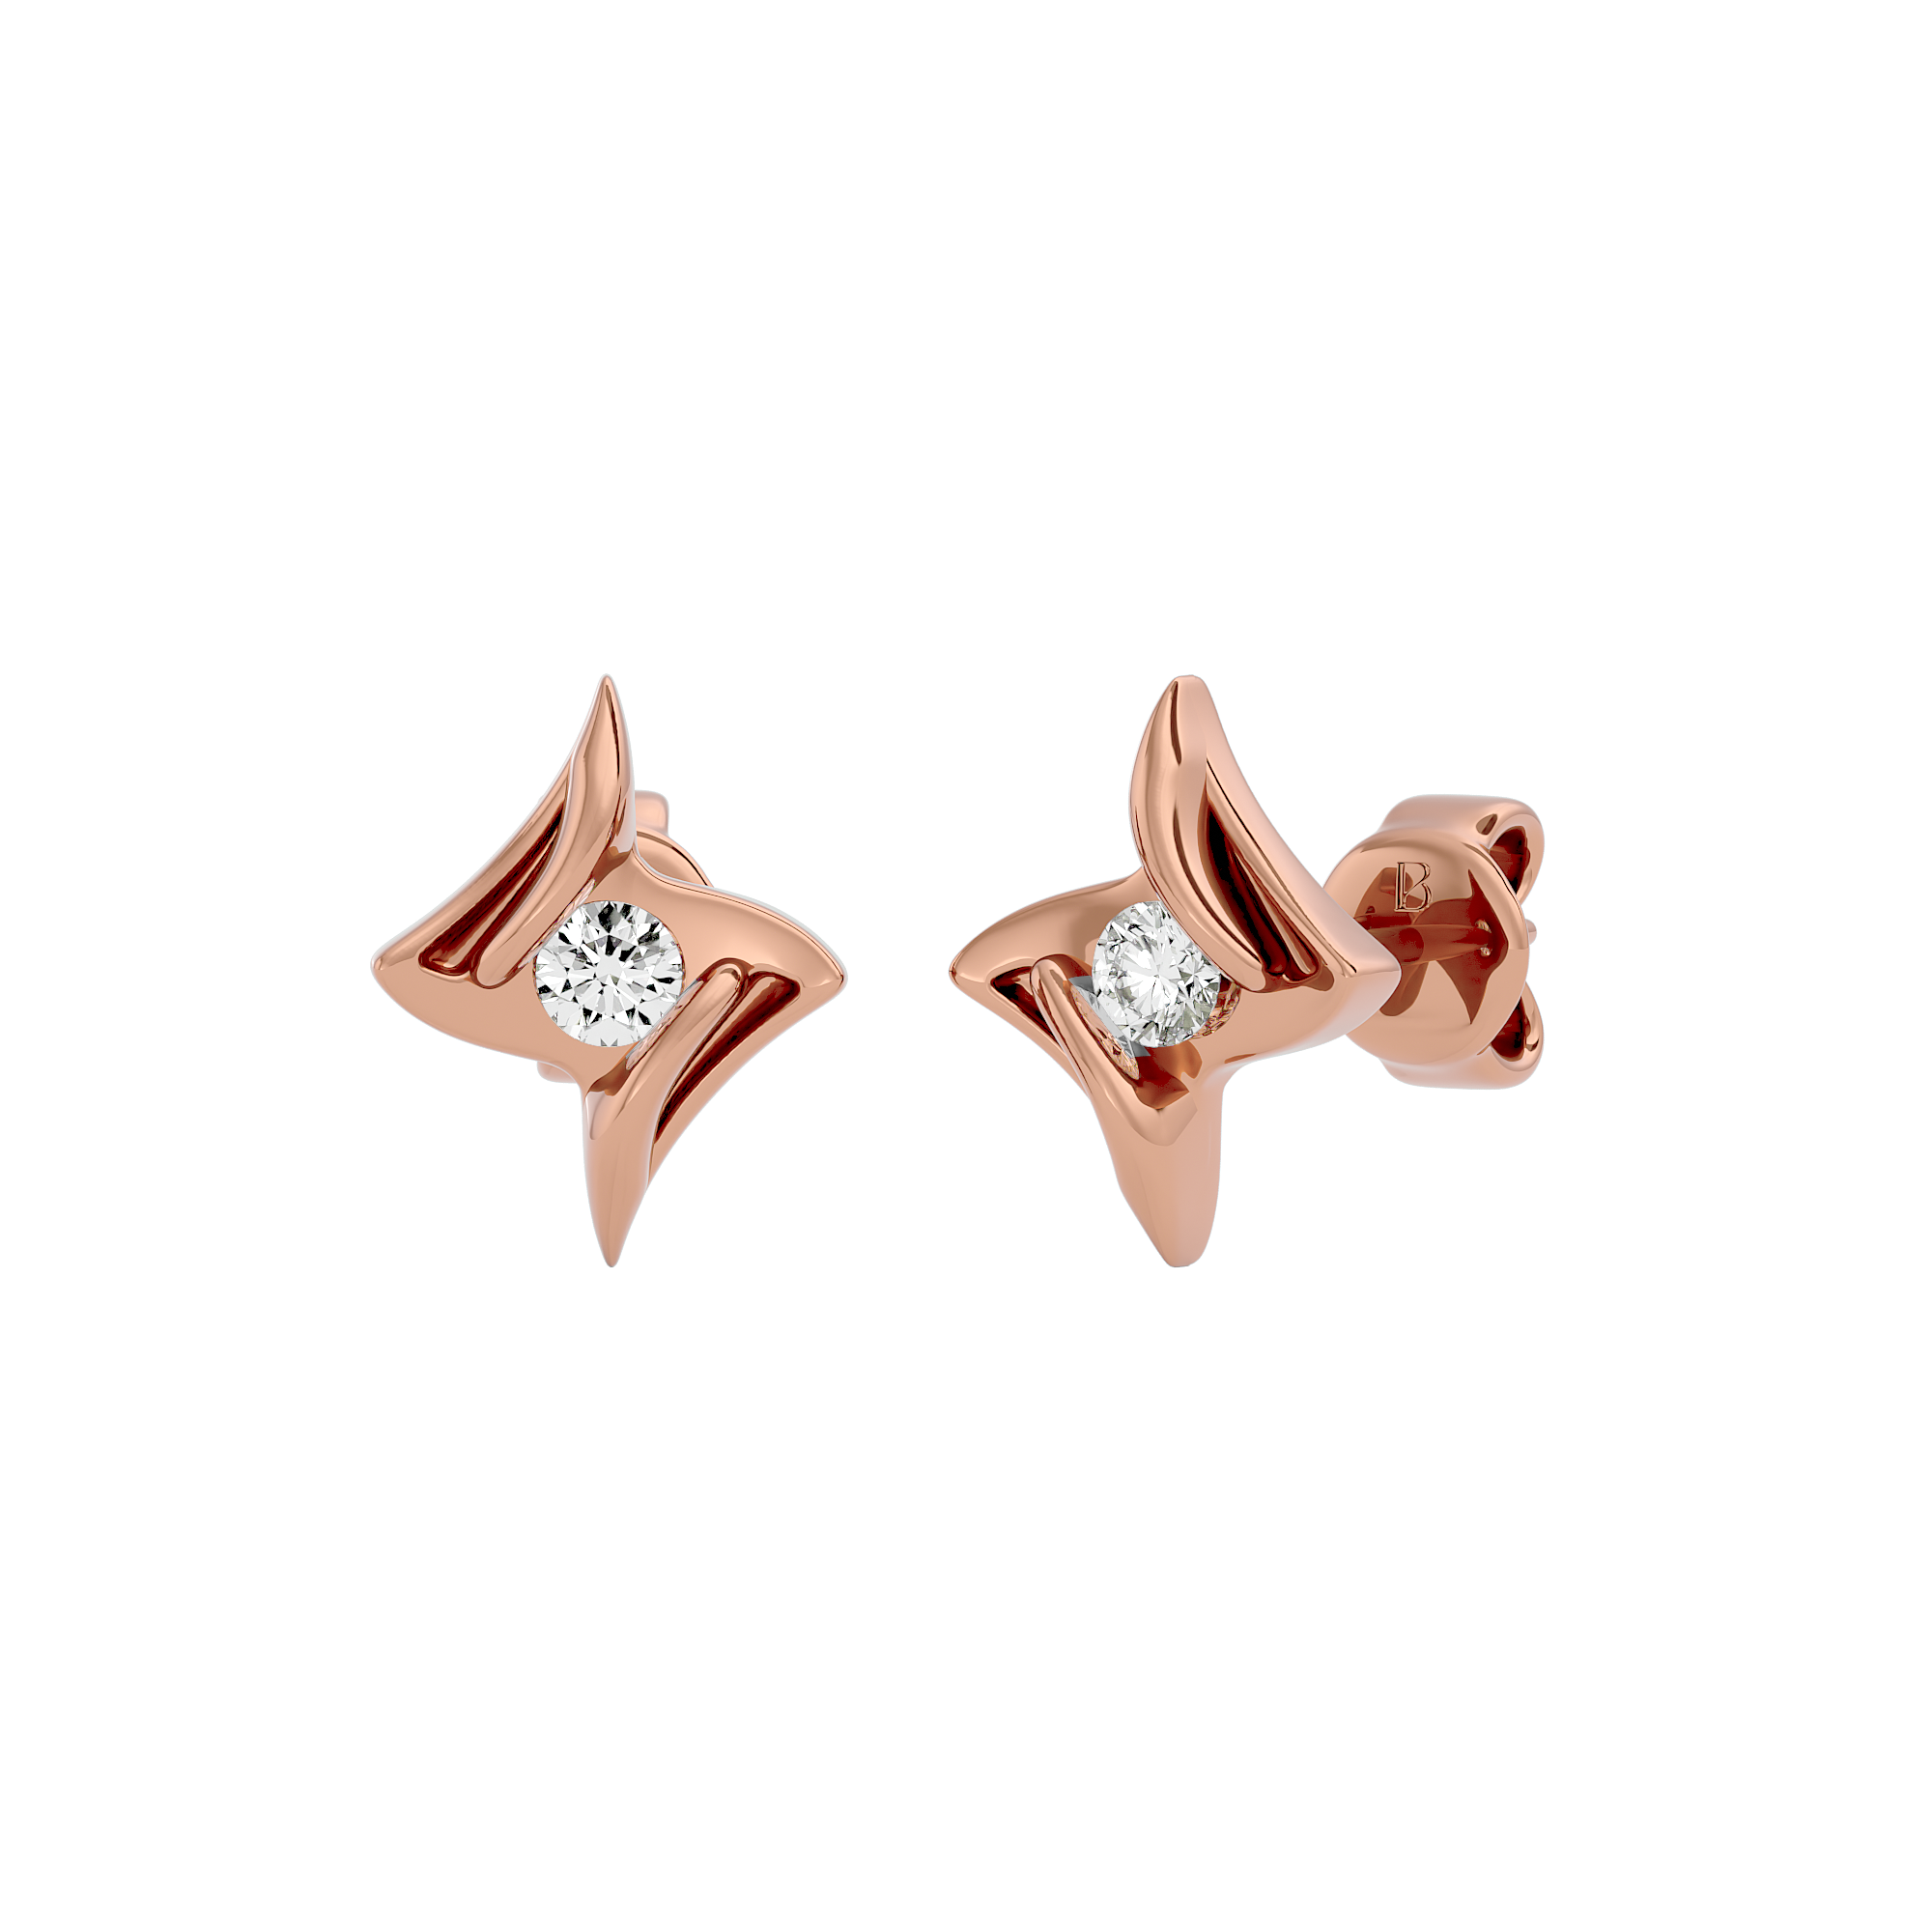 18K Gold Diamond Earrings for Women - 235-DER266 in 3.000 Grams